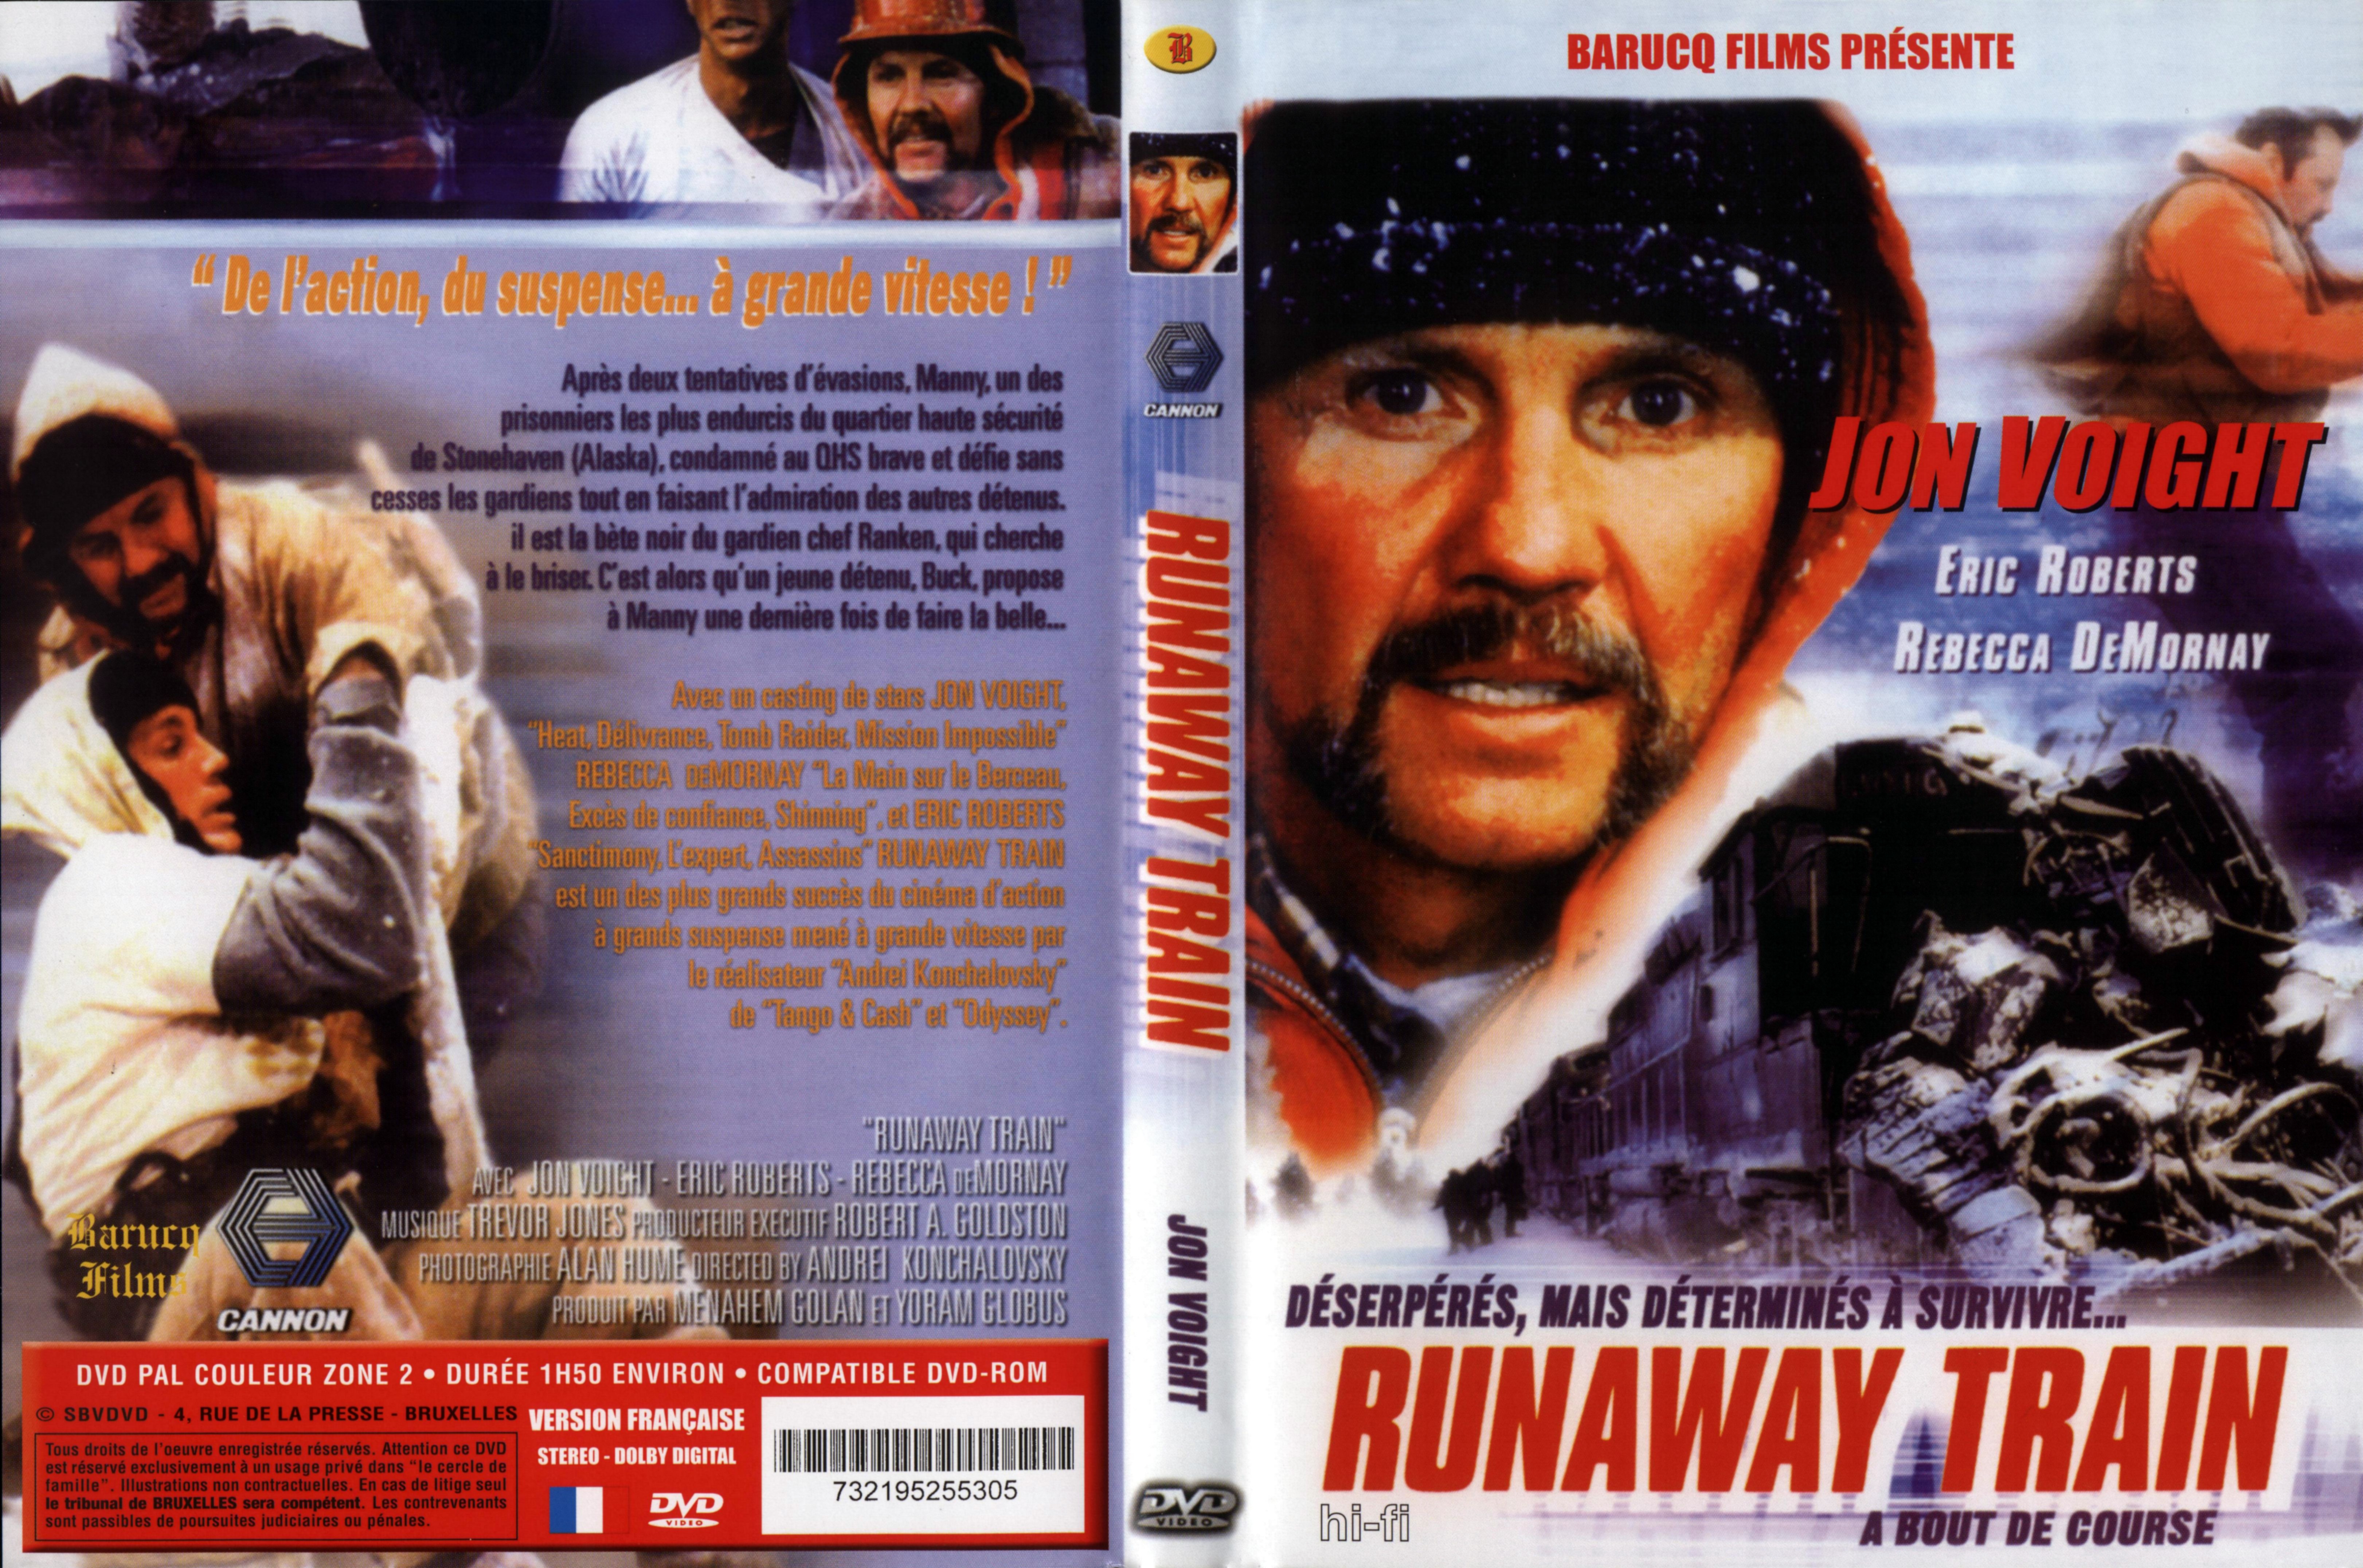 Jaquette DVD Runaway train v3